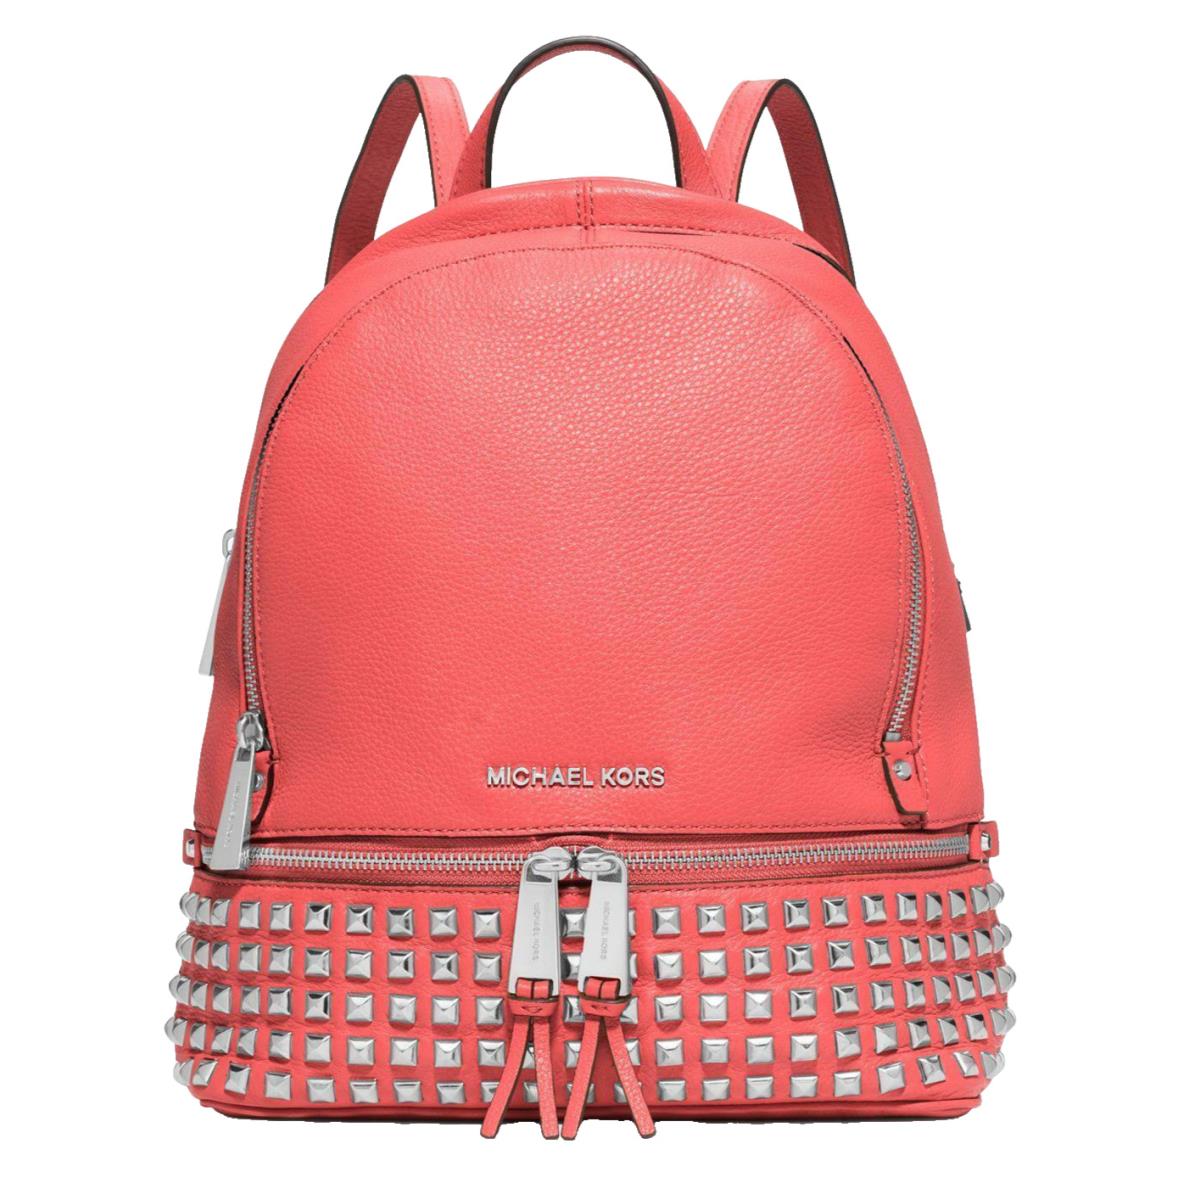 Michael Kors Rhea Small Studded Pebble Leather Backpack/bag-coral/silver